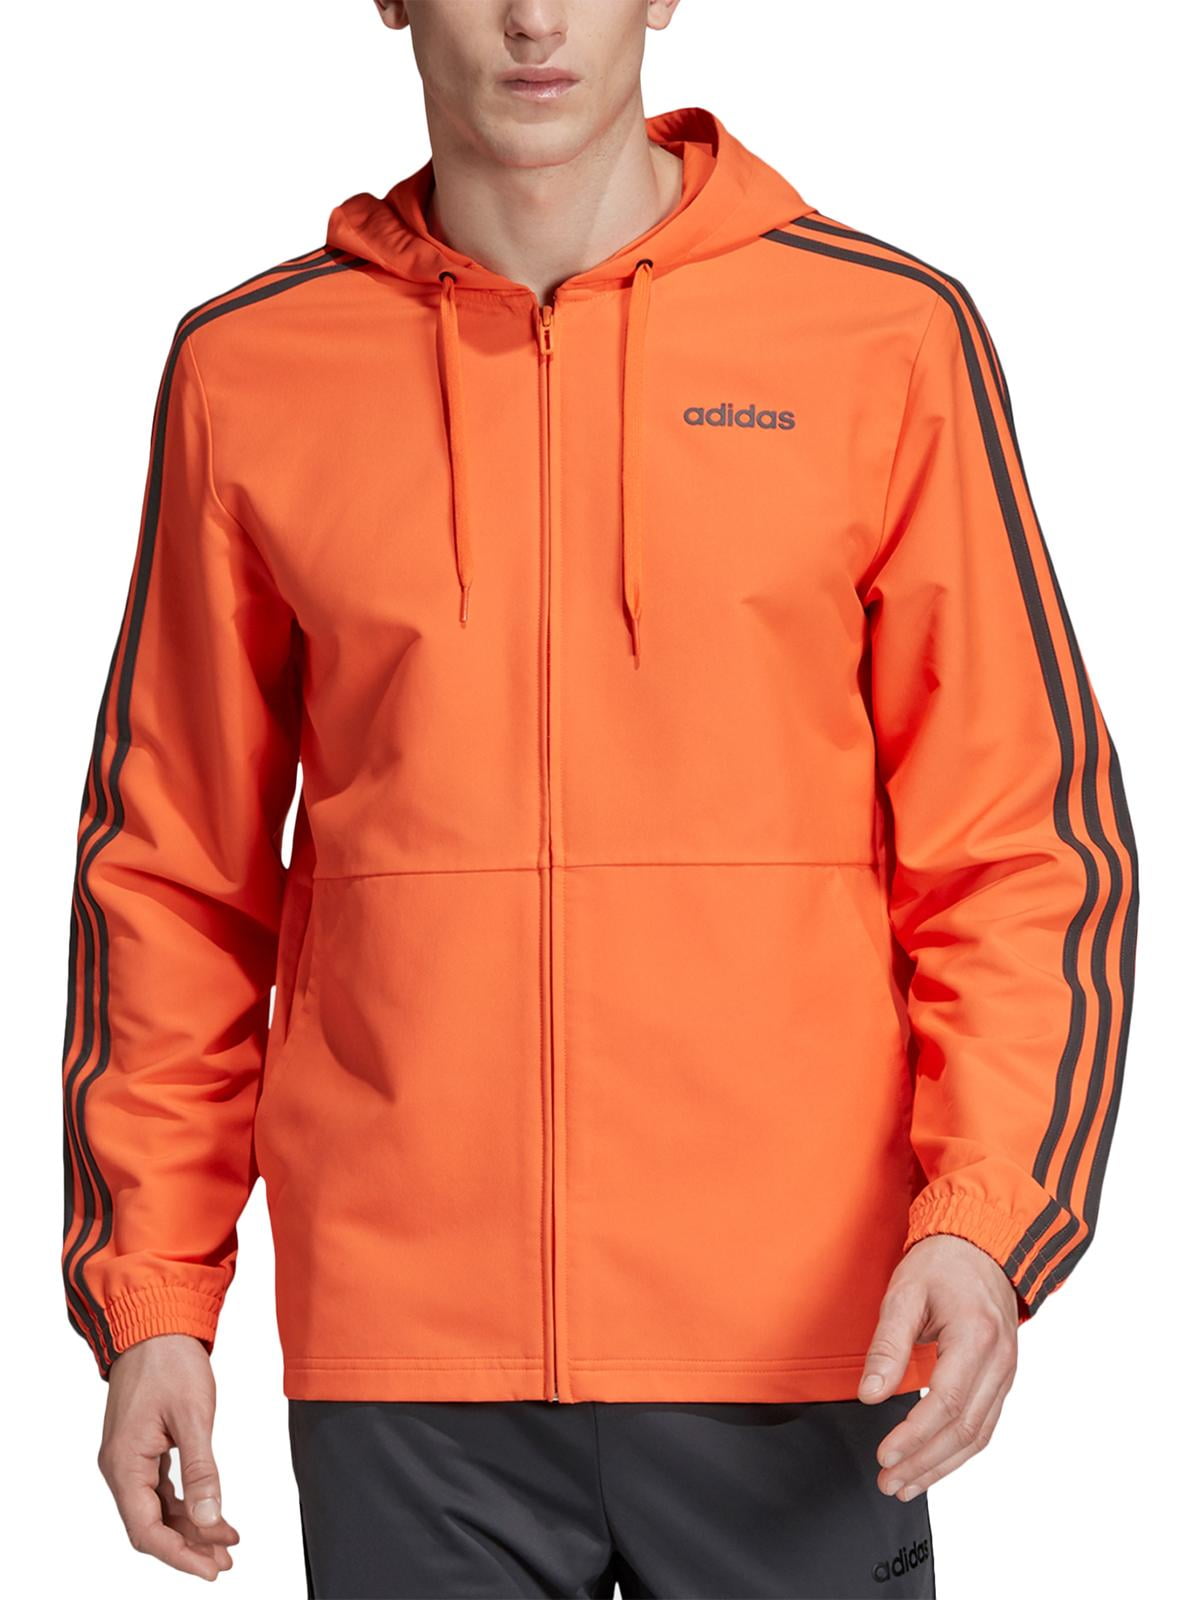 Adidas - Adidas Mens Hooded Zip-Up Athletic Jacket Orange L - Walmart